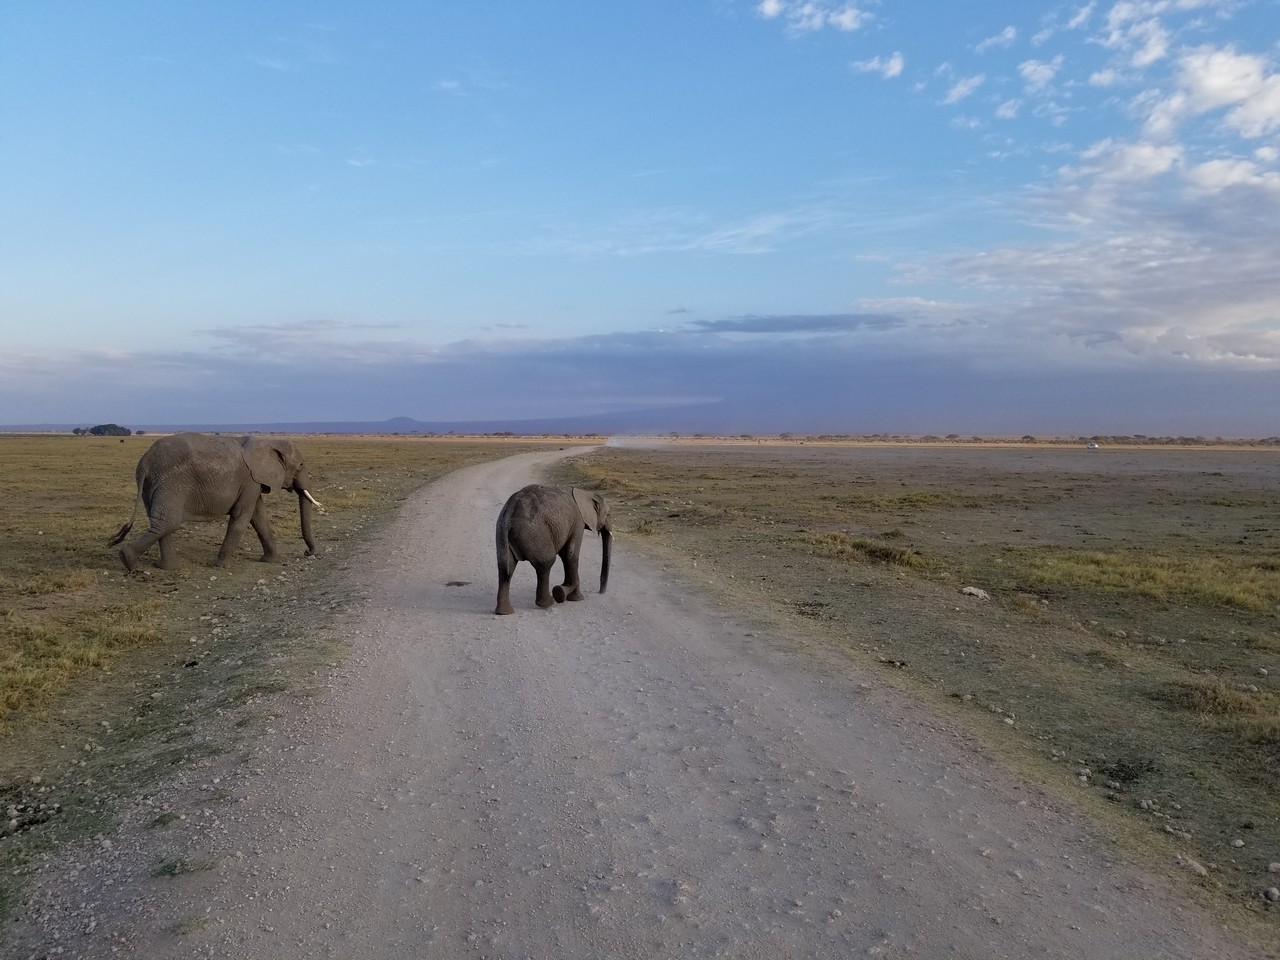 elephants crossing a dirt road